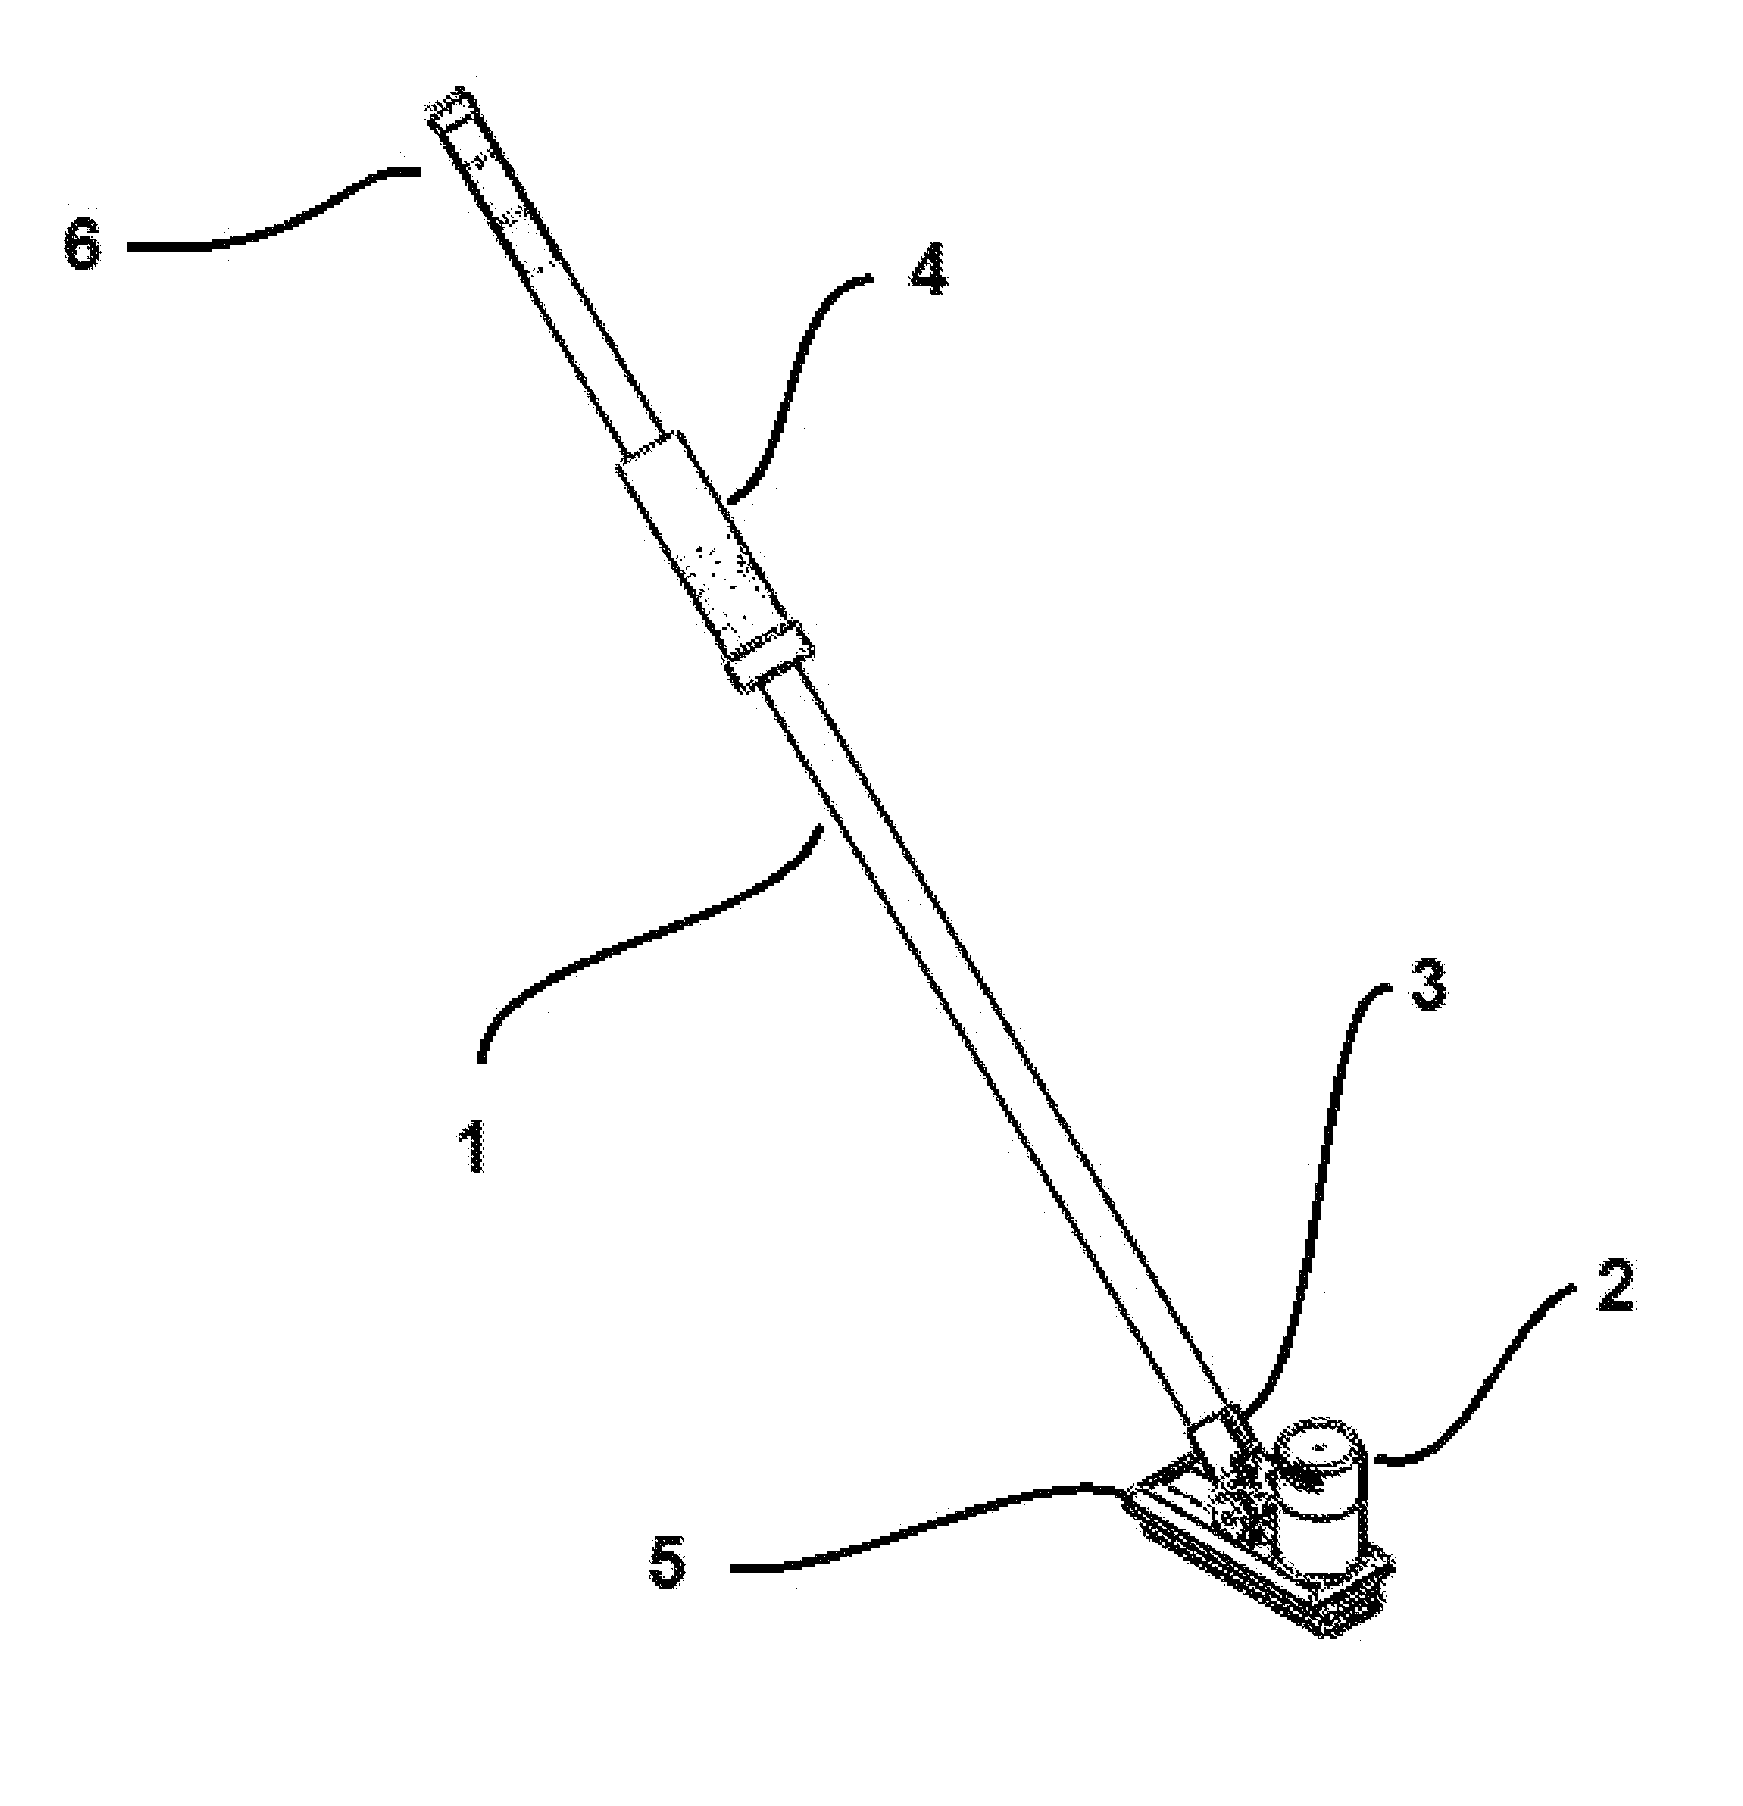 Curling broom incorporating a motor